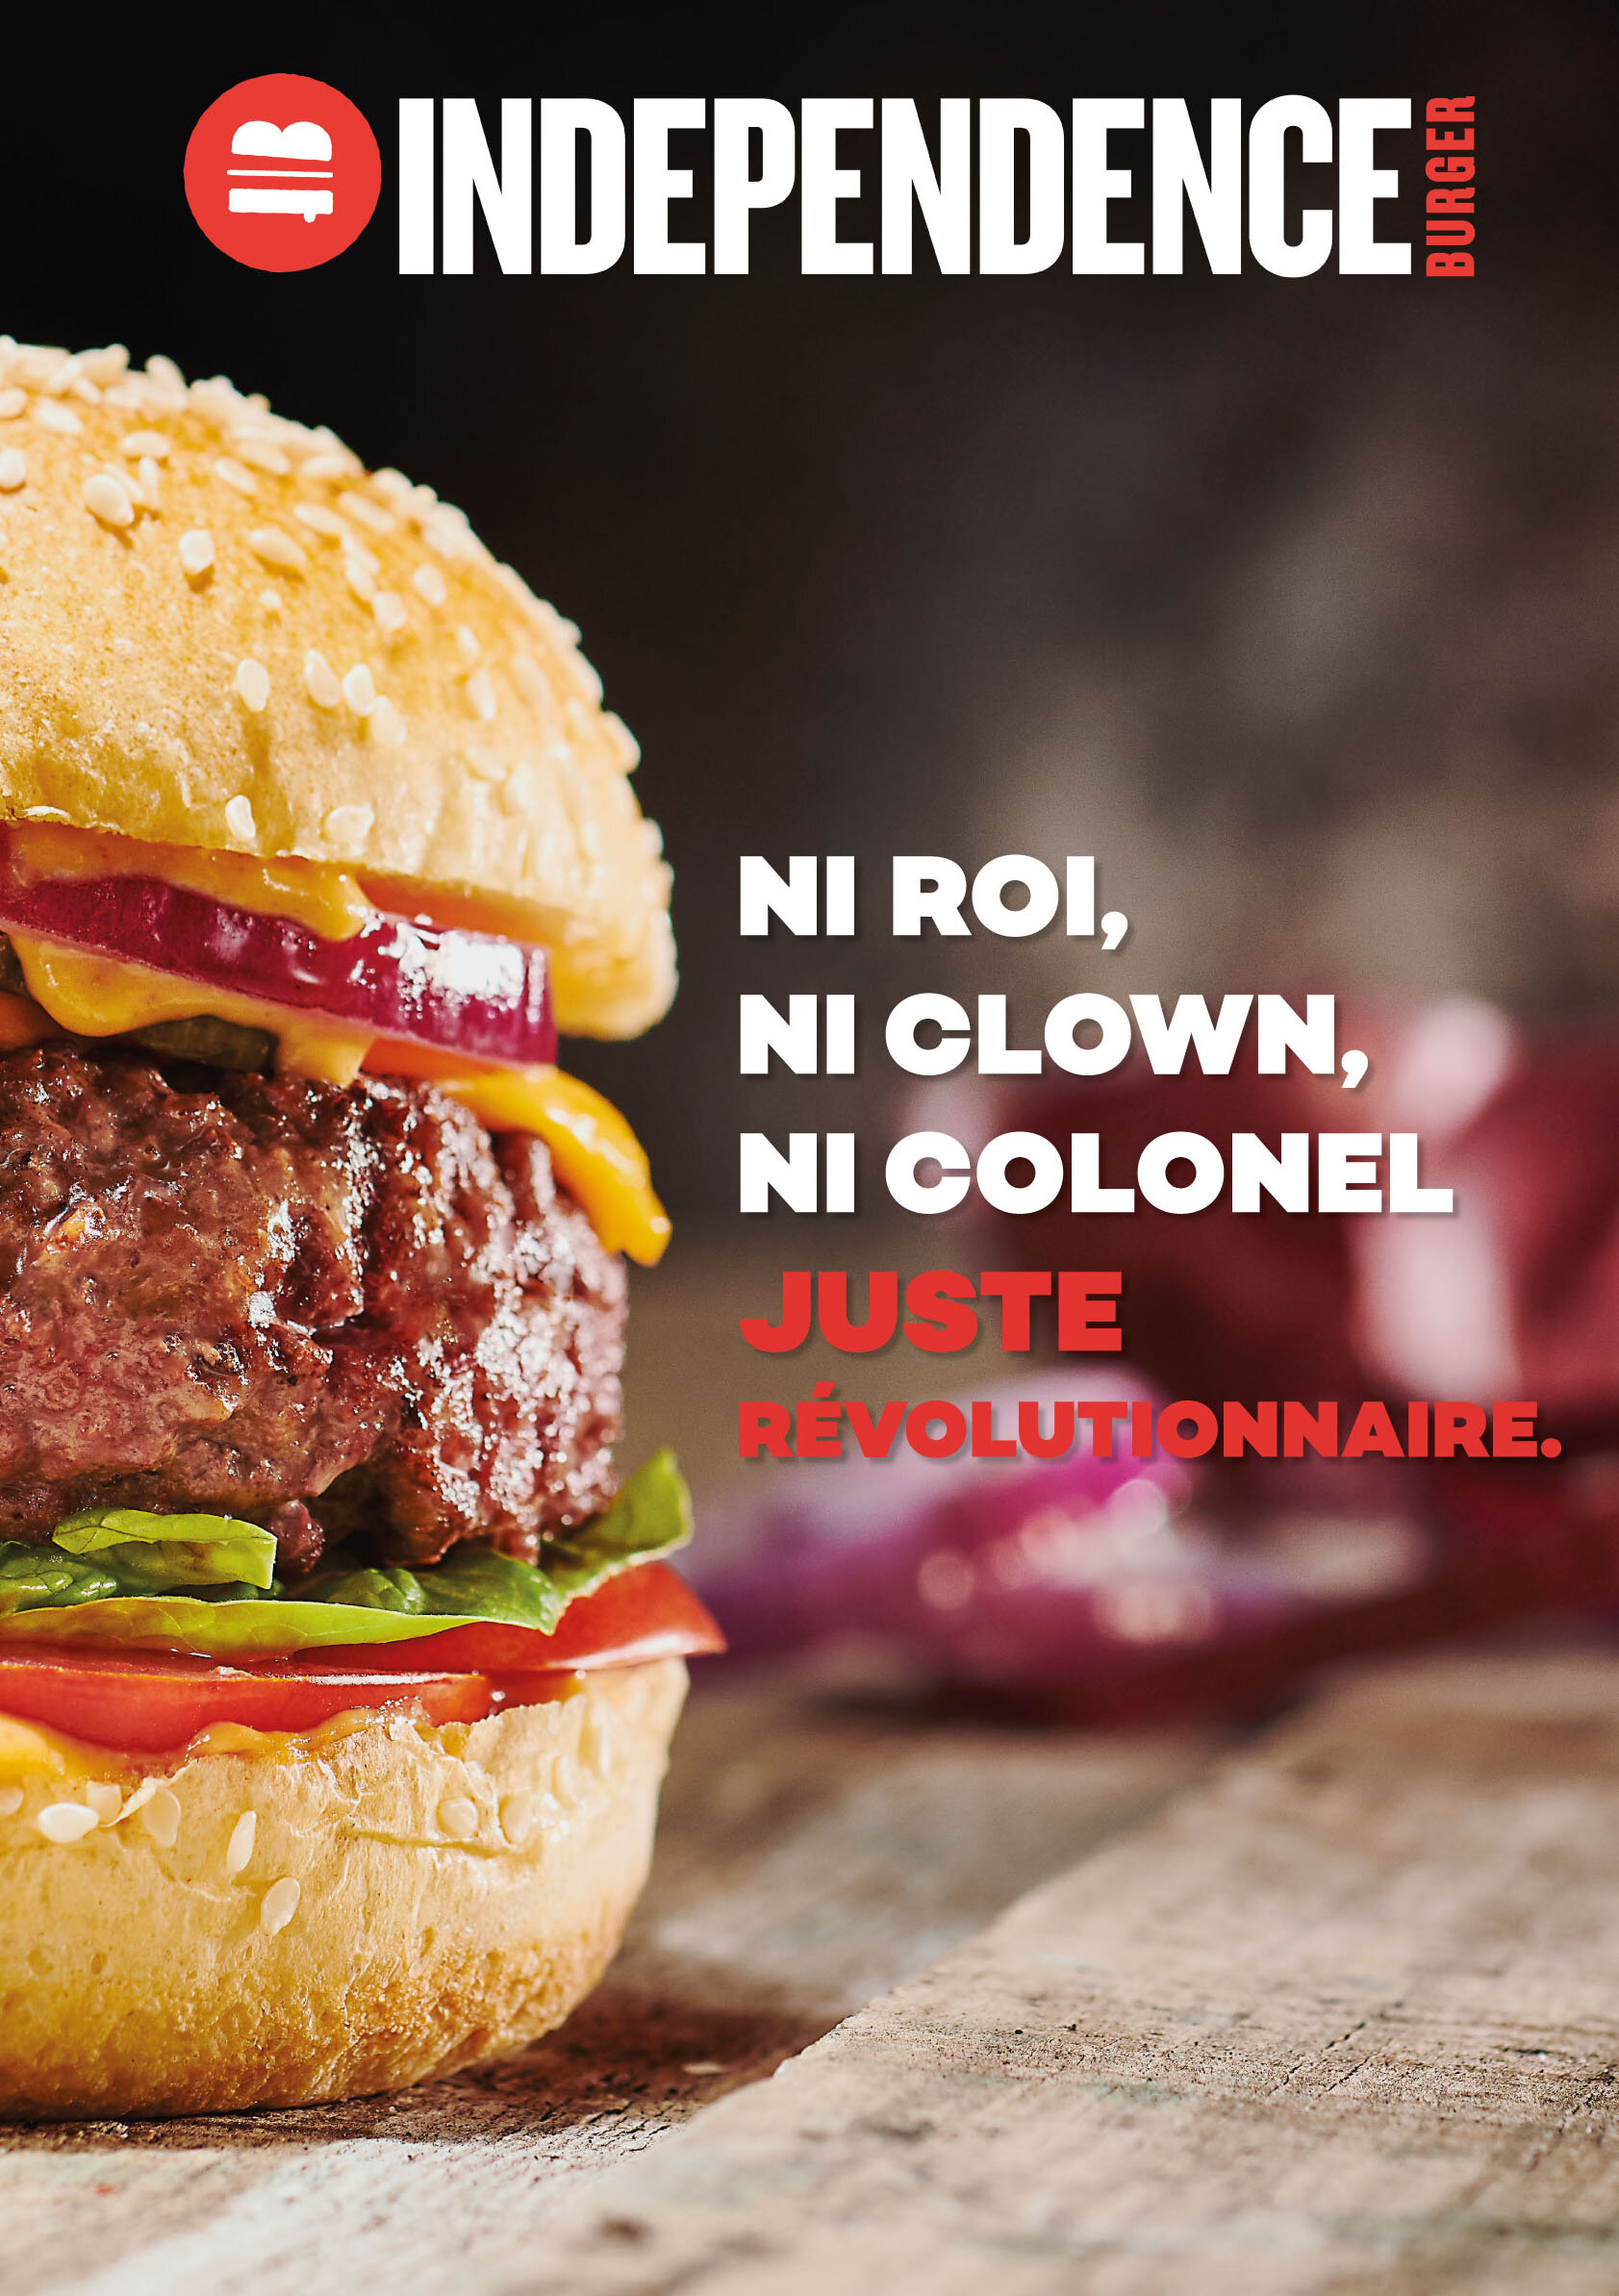 Laurent_Moynat_Valerie_Paumelle_Agent_Photographe_Culinaire_Independence_Burger (8).jpg